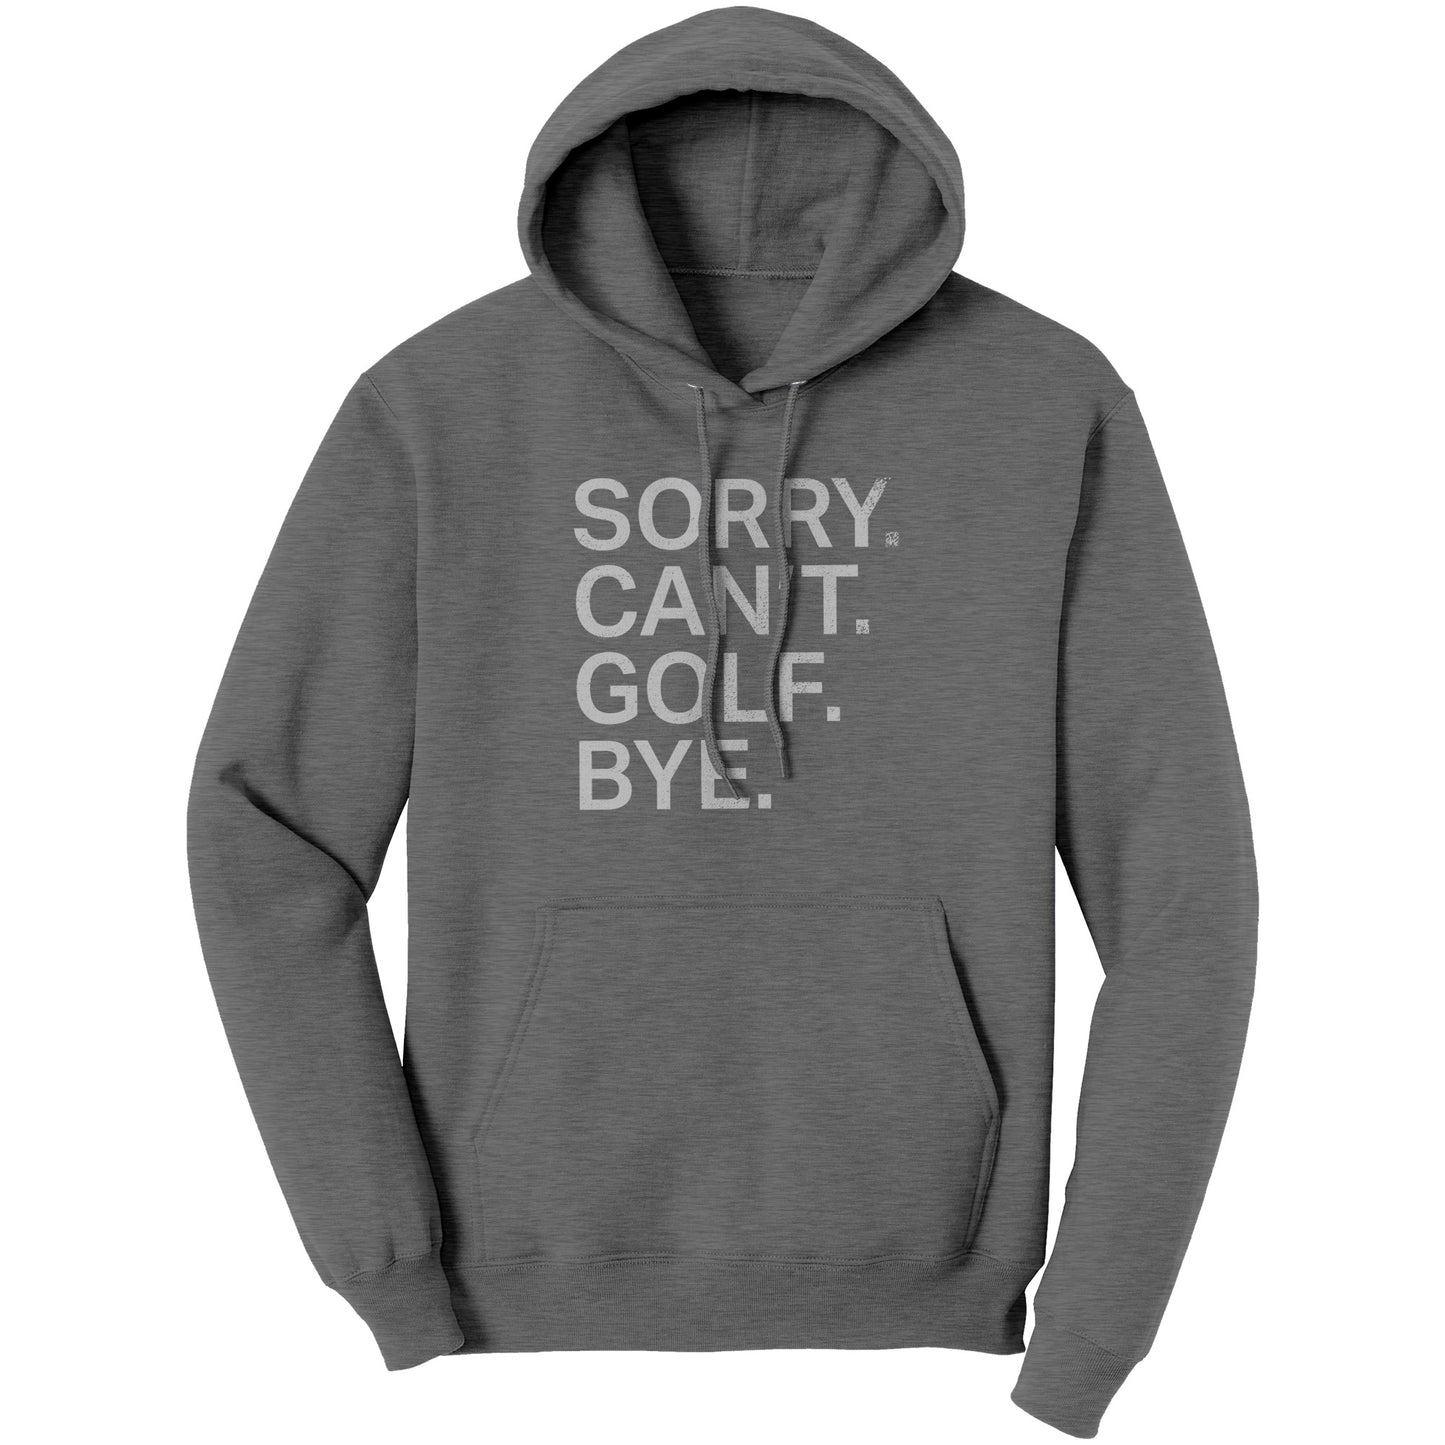 Sorry. Can't. Golf. Bye. Hoodie.